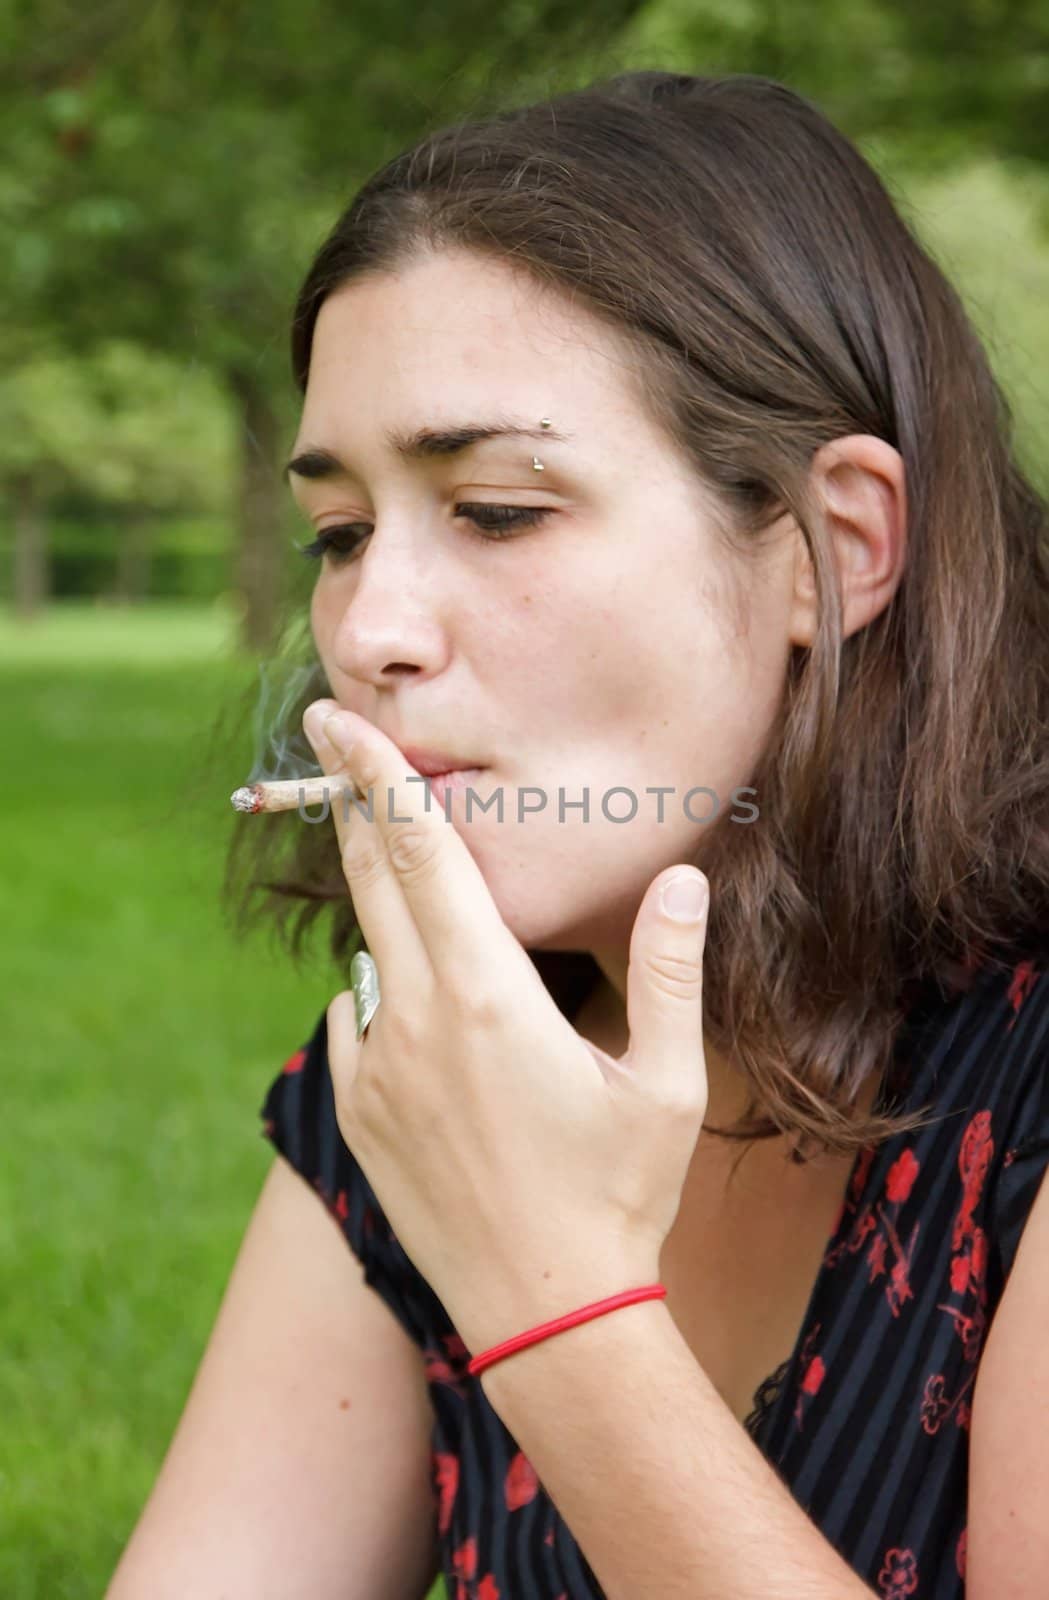 woman smoking outdoors by neko92vl